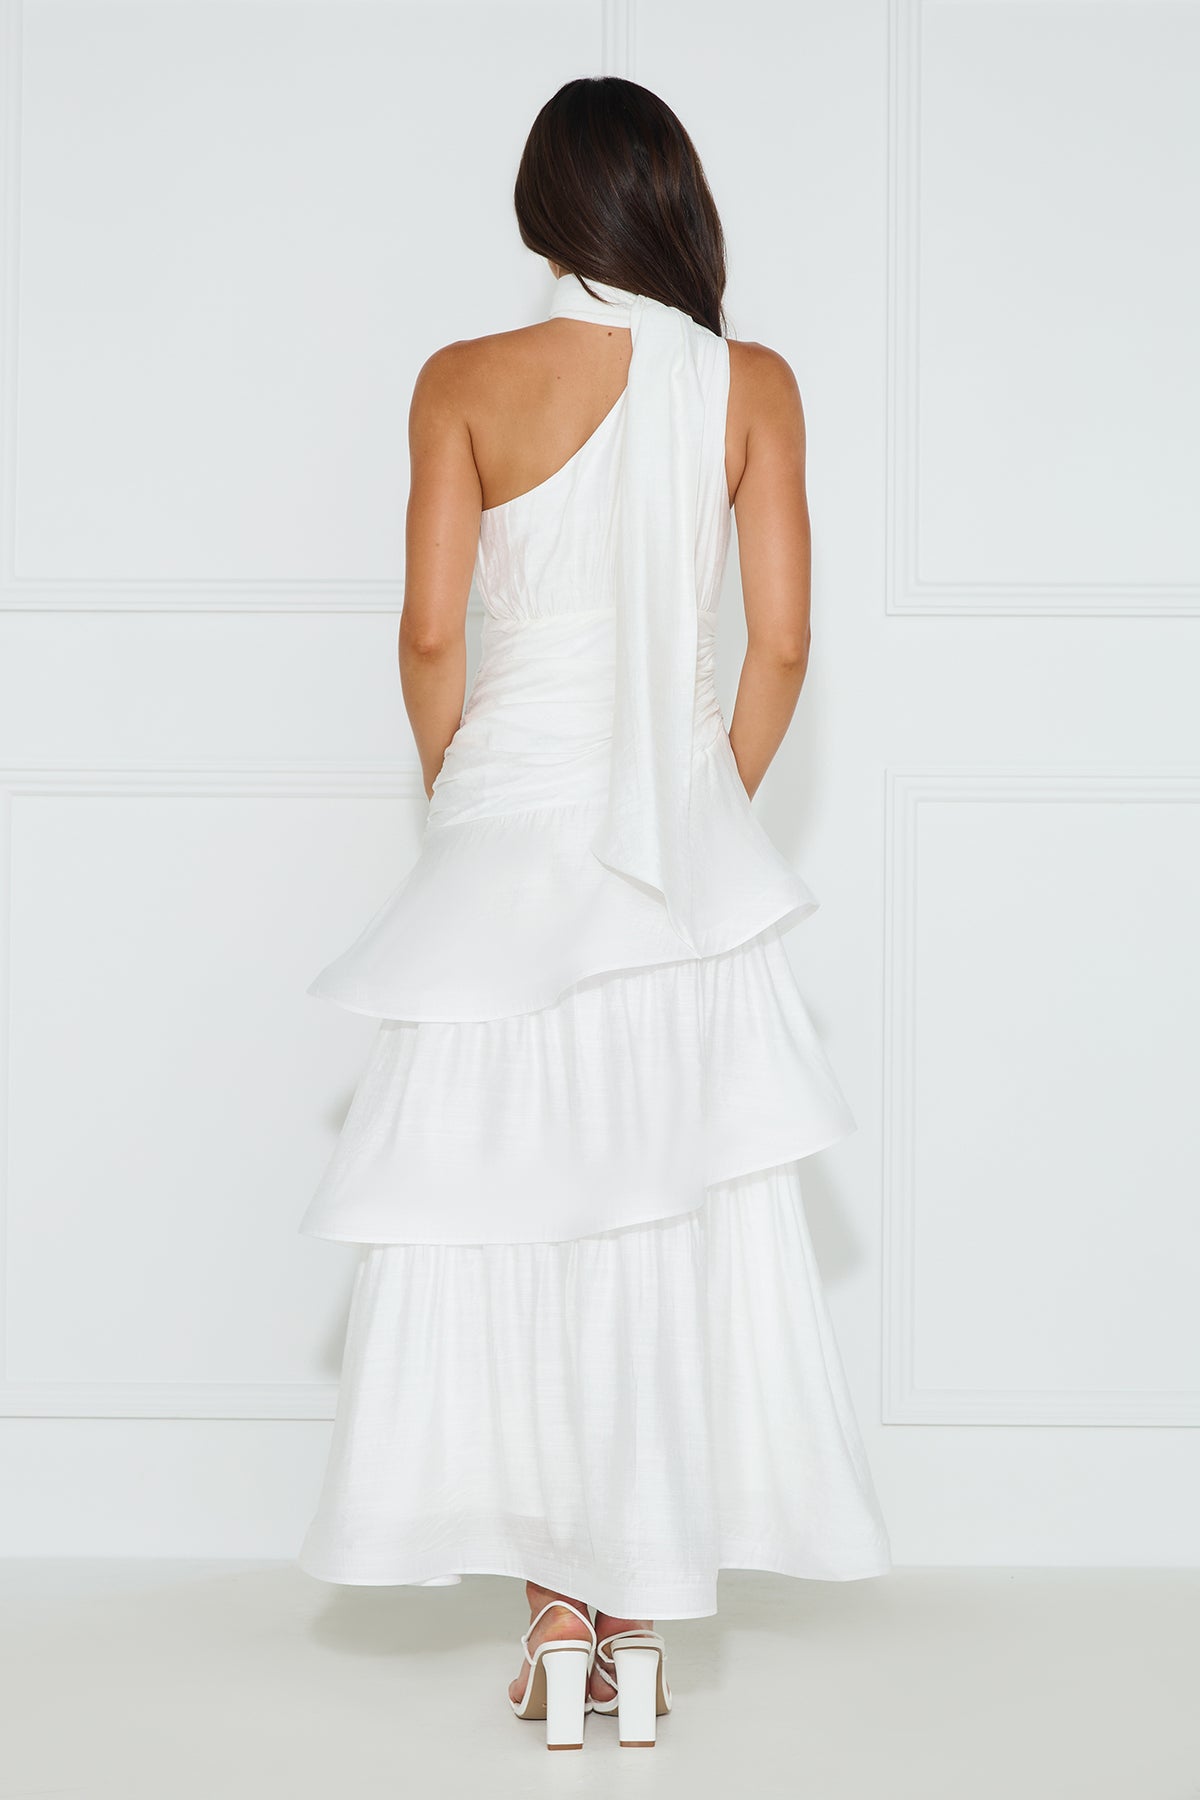 Shop Formal Dress - Cara One Shoulder Maxi Dress White fourth image